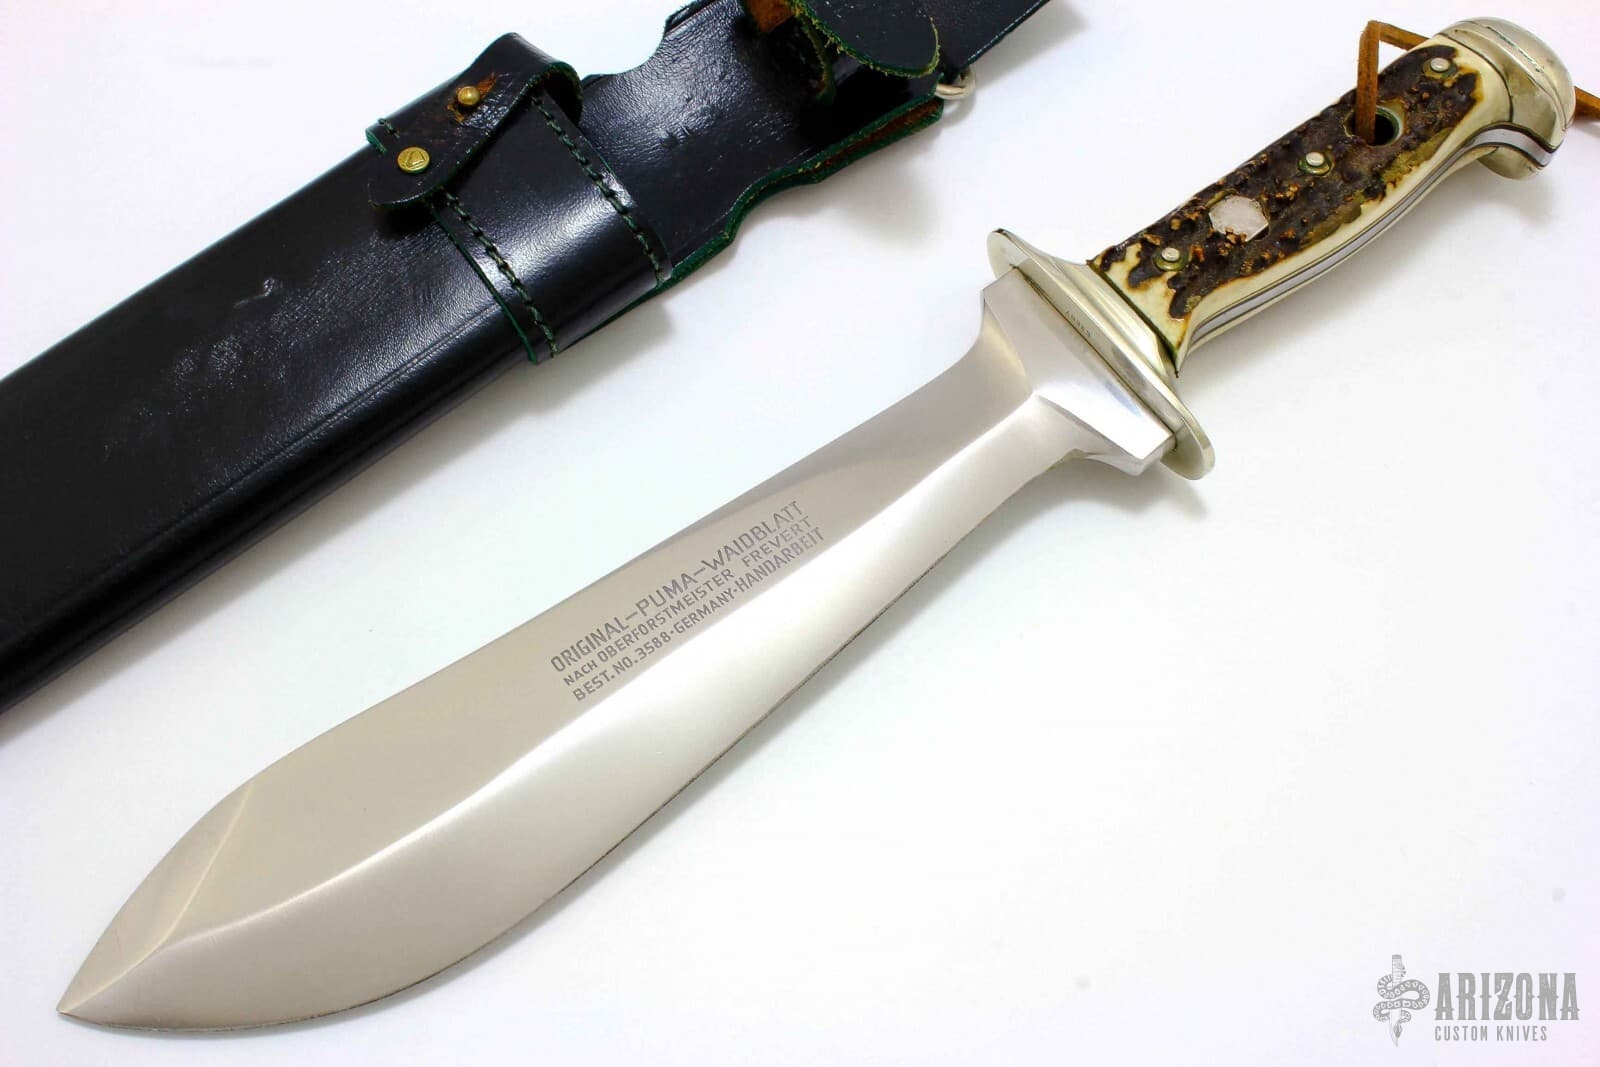 Original-Puma-Waidblatt | Arizona Custom Knives